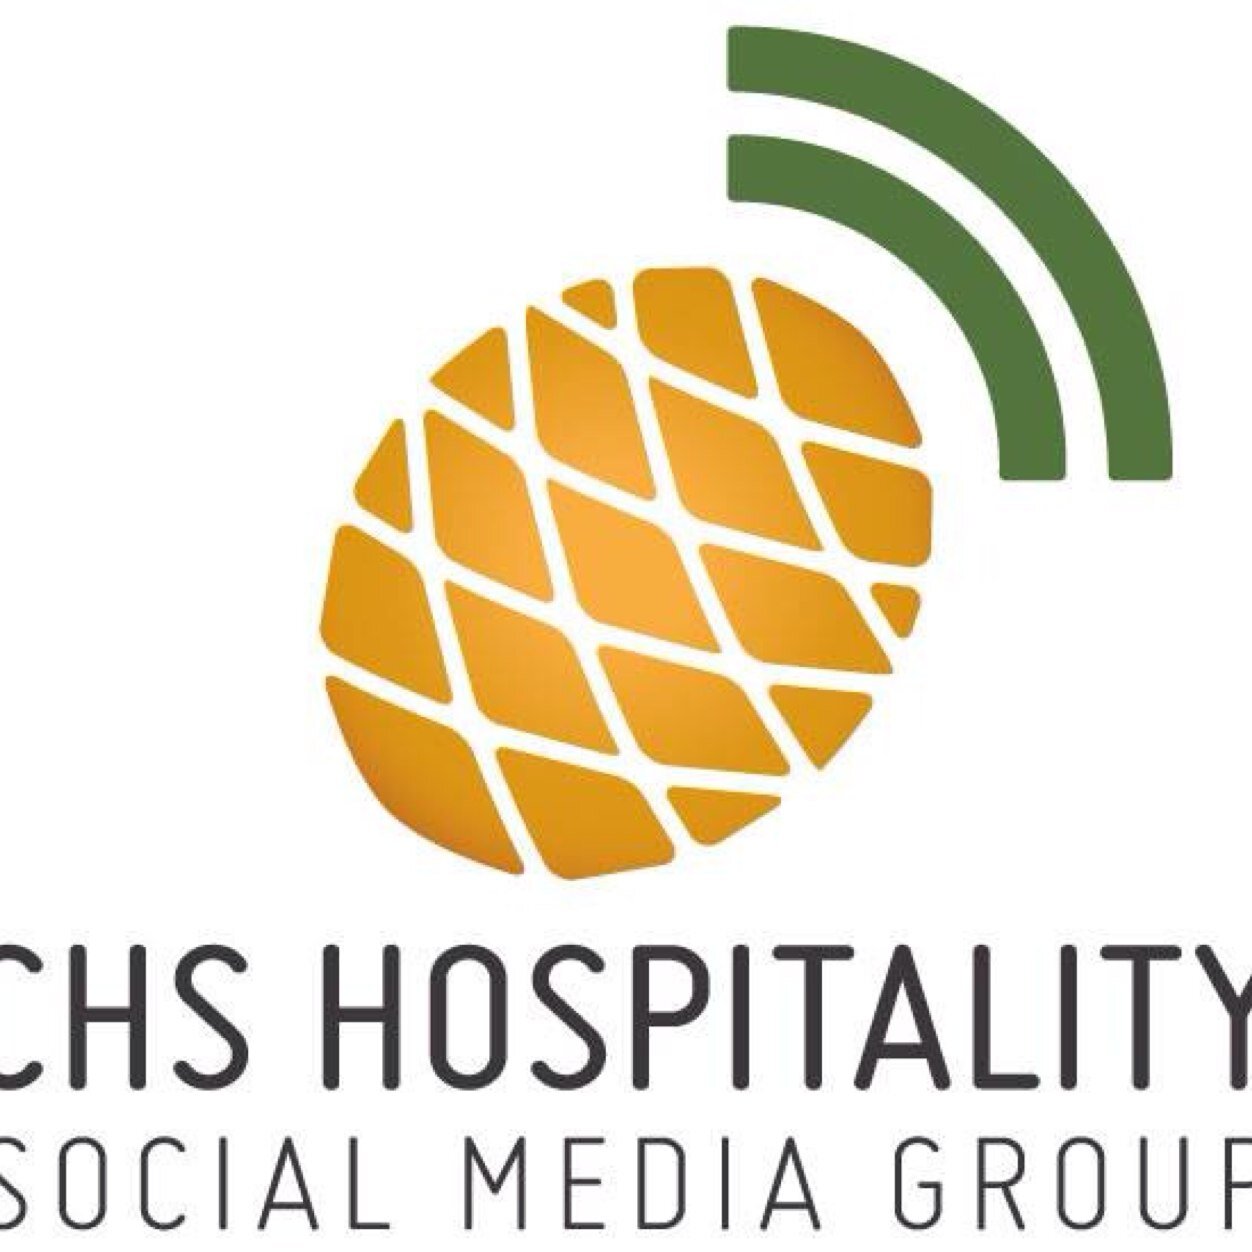 Charleston's Hospitality Social Media Group